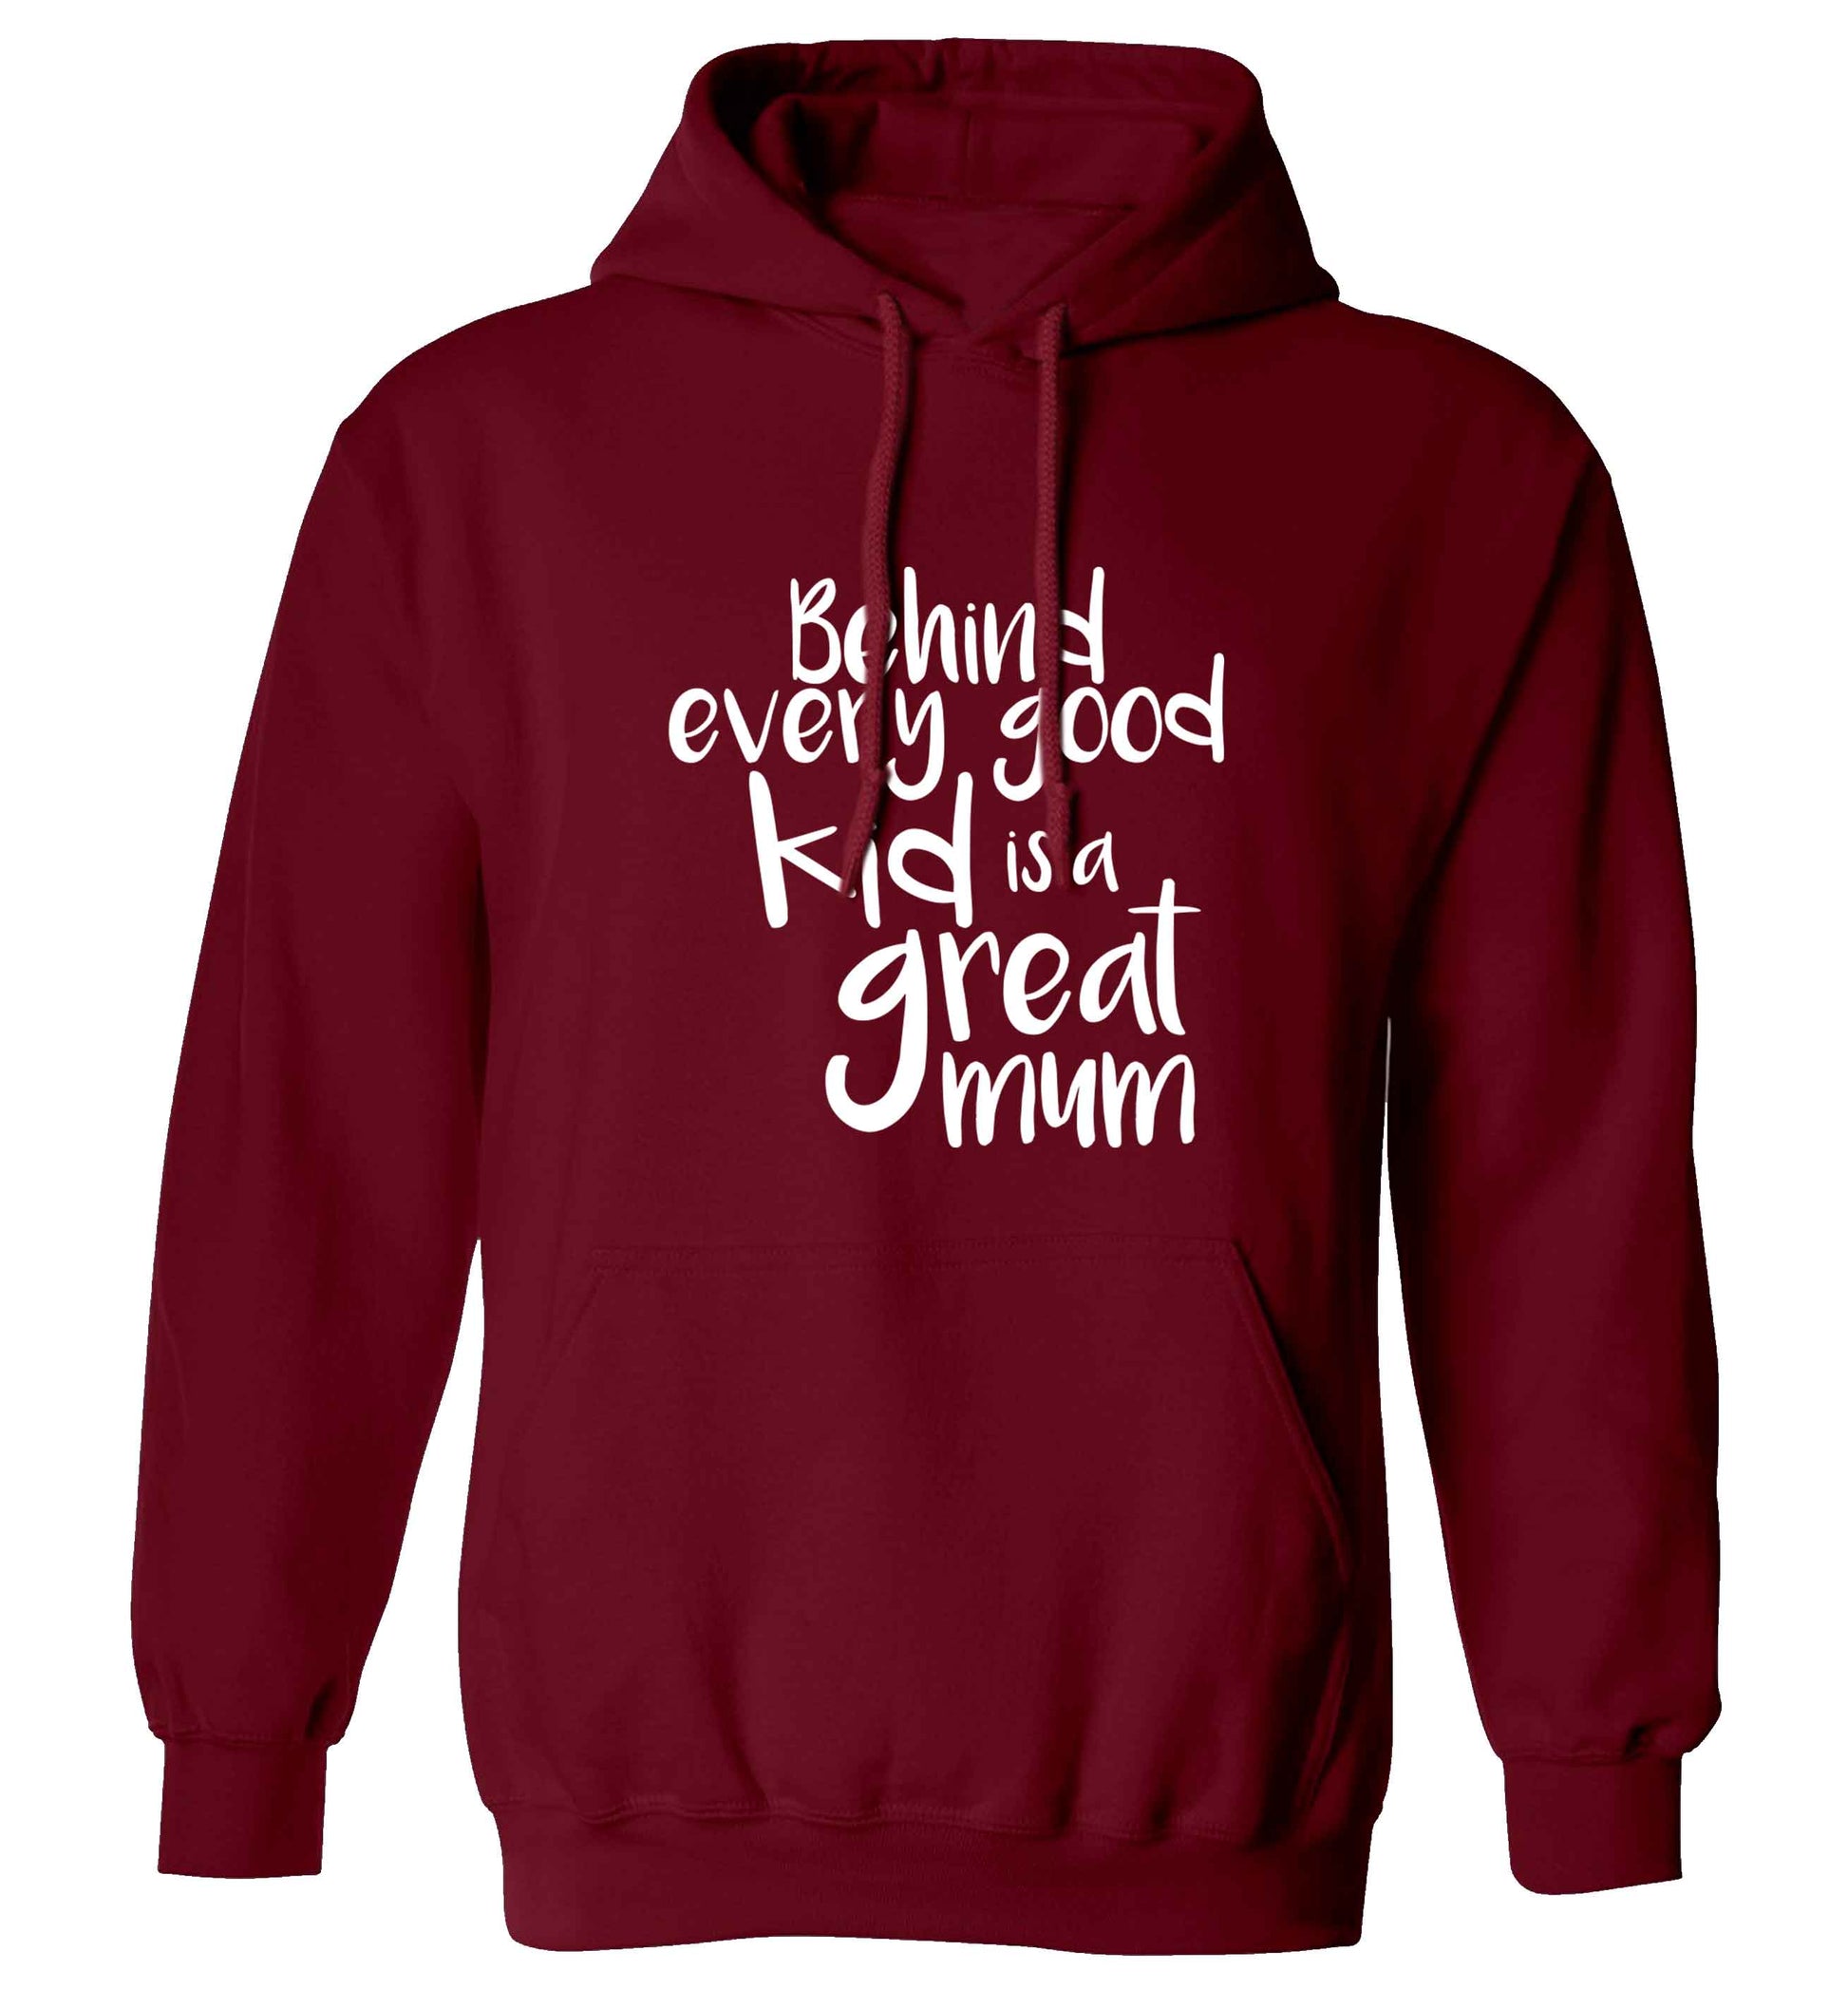 Behind every good kid is a great mum adults unisex maroon hoodie 2XL